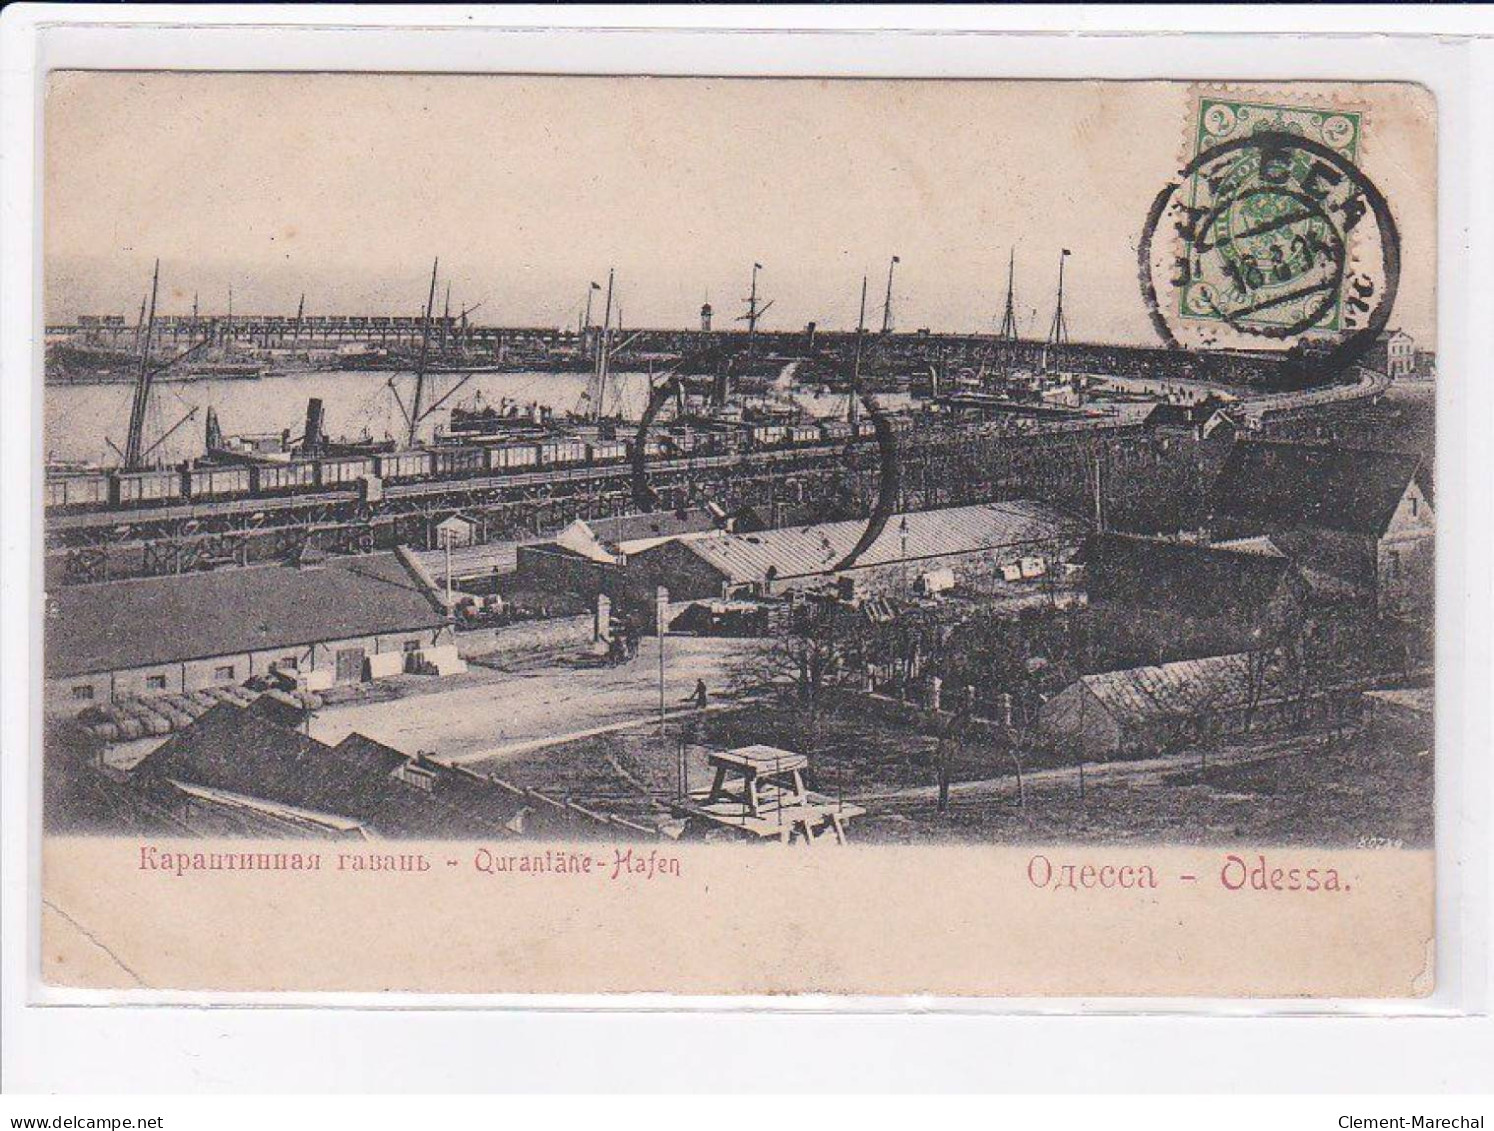 UKRAINE : ODESSA - Qurantane Hafen (Quarantaine - Port) - état - Oekraïne